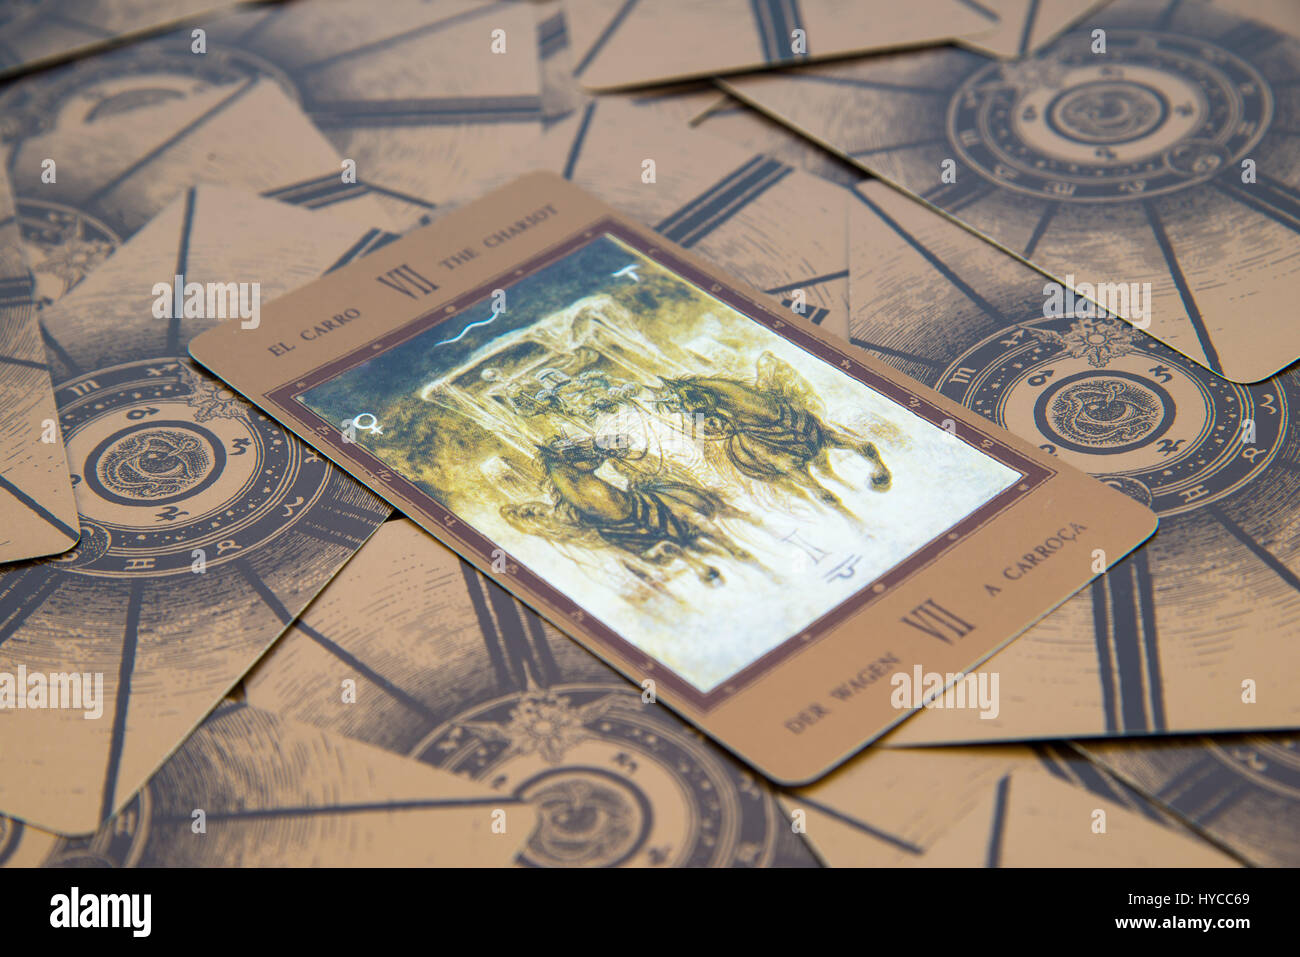 Moscow, Russia - January 29, 2017: Tarot card The Chariot. Labirinth tarot deck. Esoteric background Stock Photo